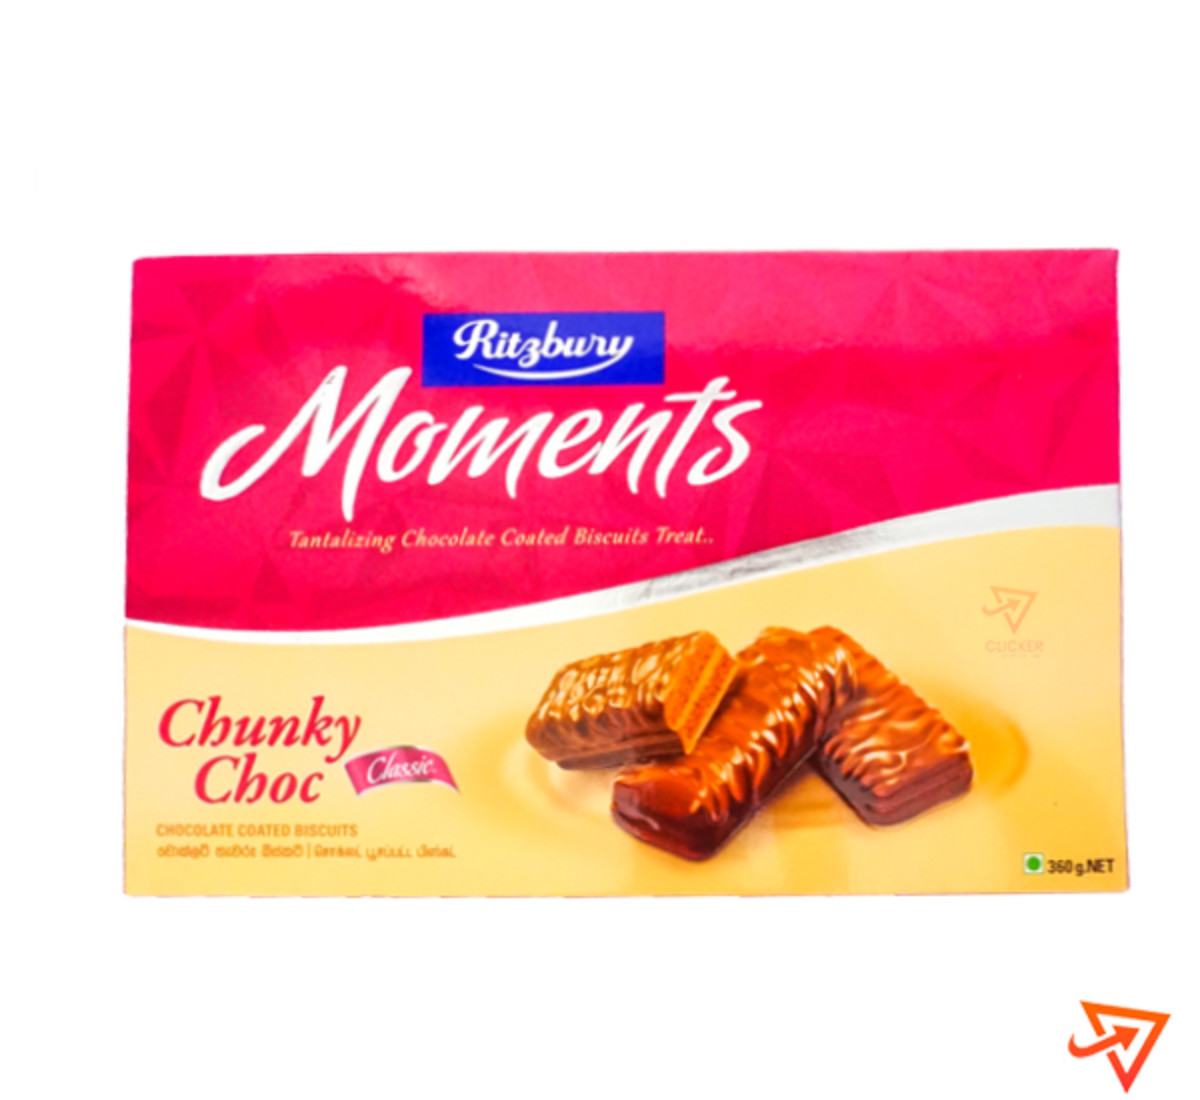 Clicker product 360g CBL  Ritzbury Moments Chunky choc Classic 1157